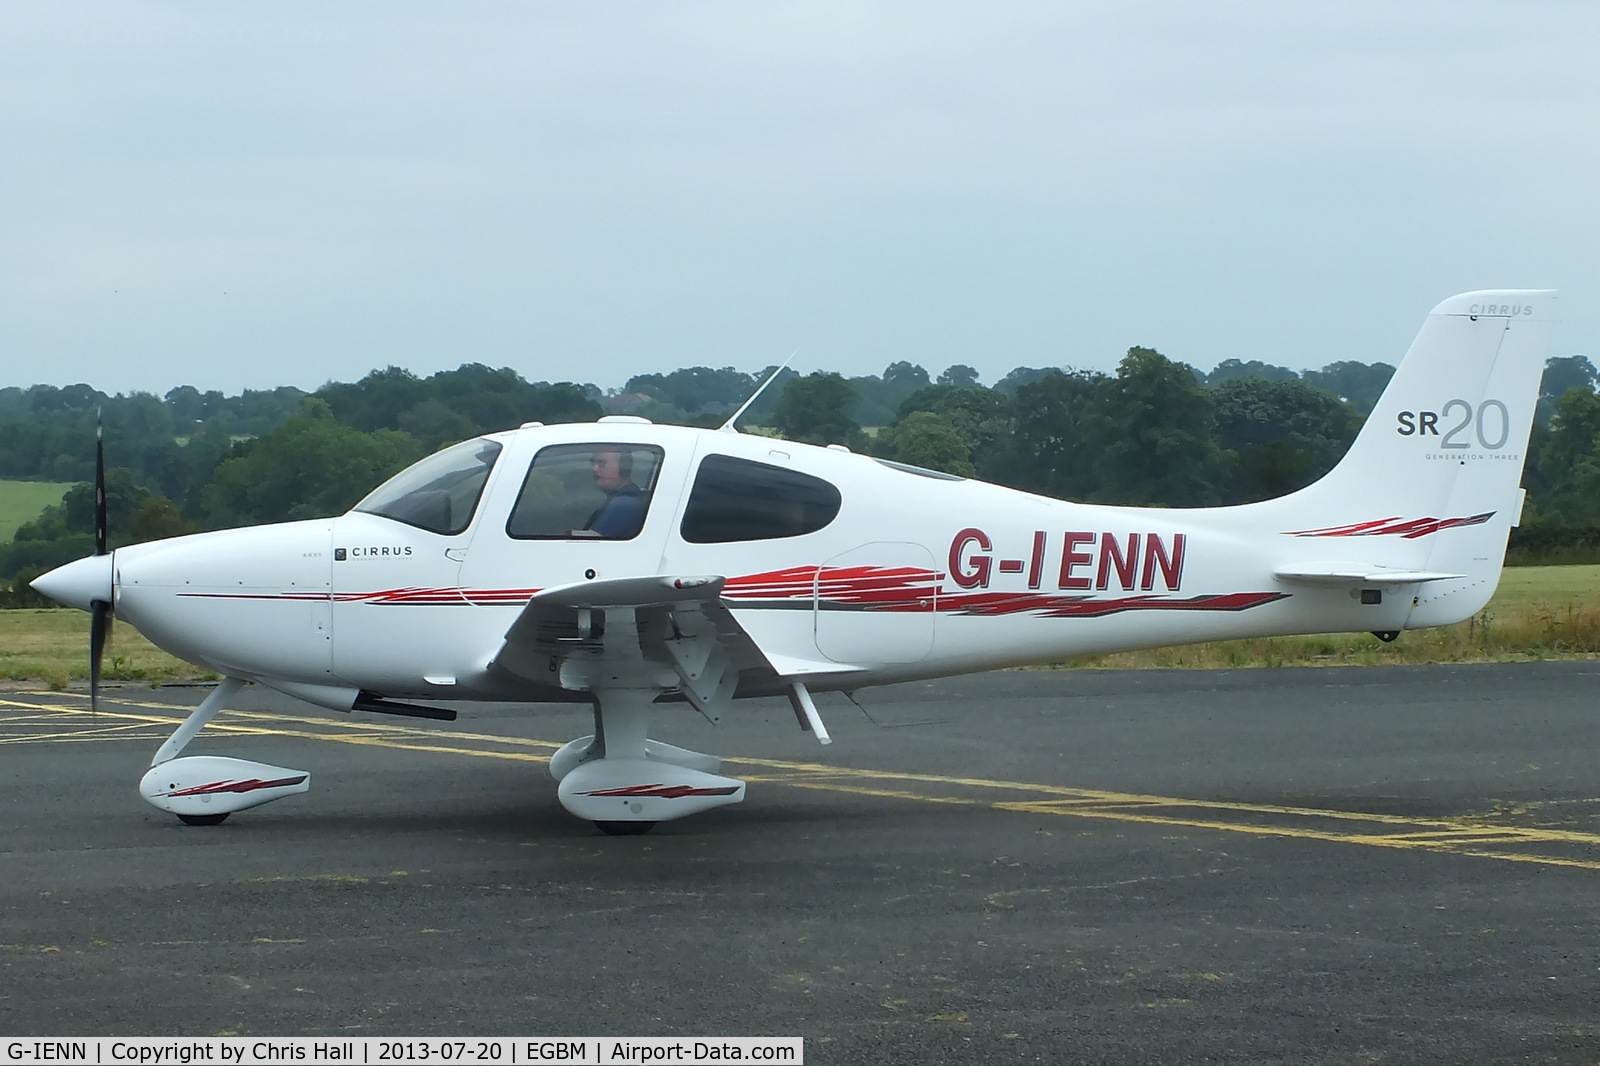 G-IENN, 2008 Cirrus SR20 C/N 1899, at the Tatenhill Charity Fly in